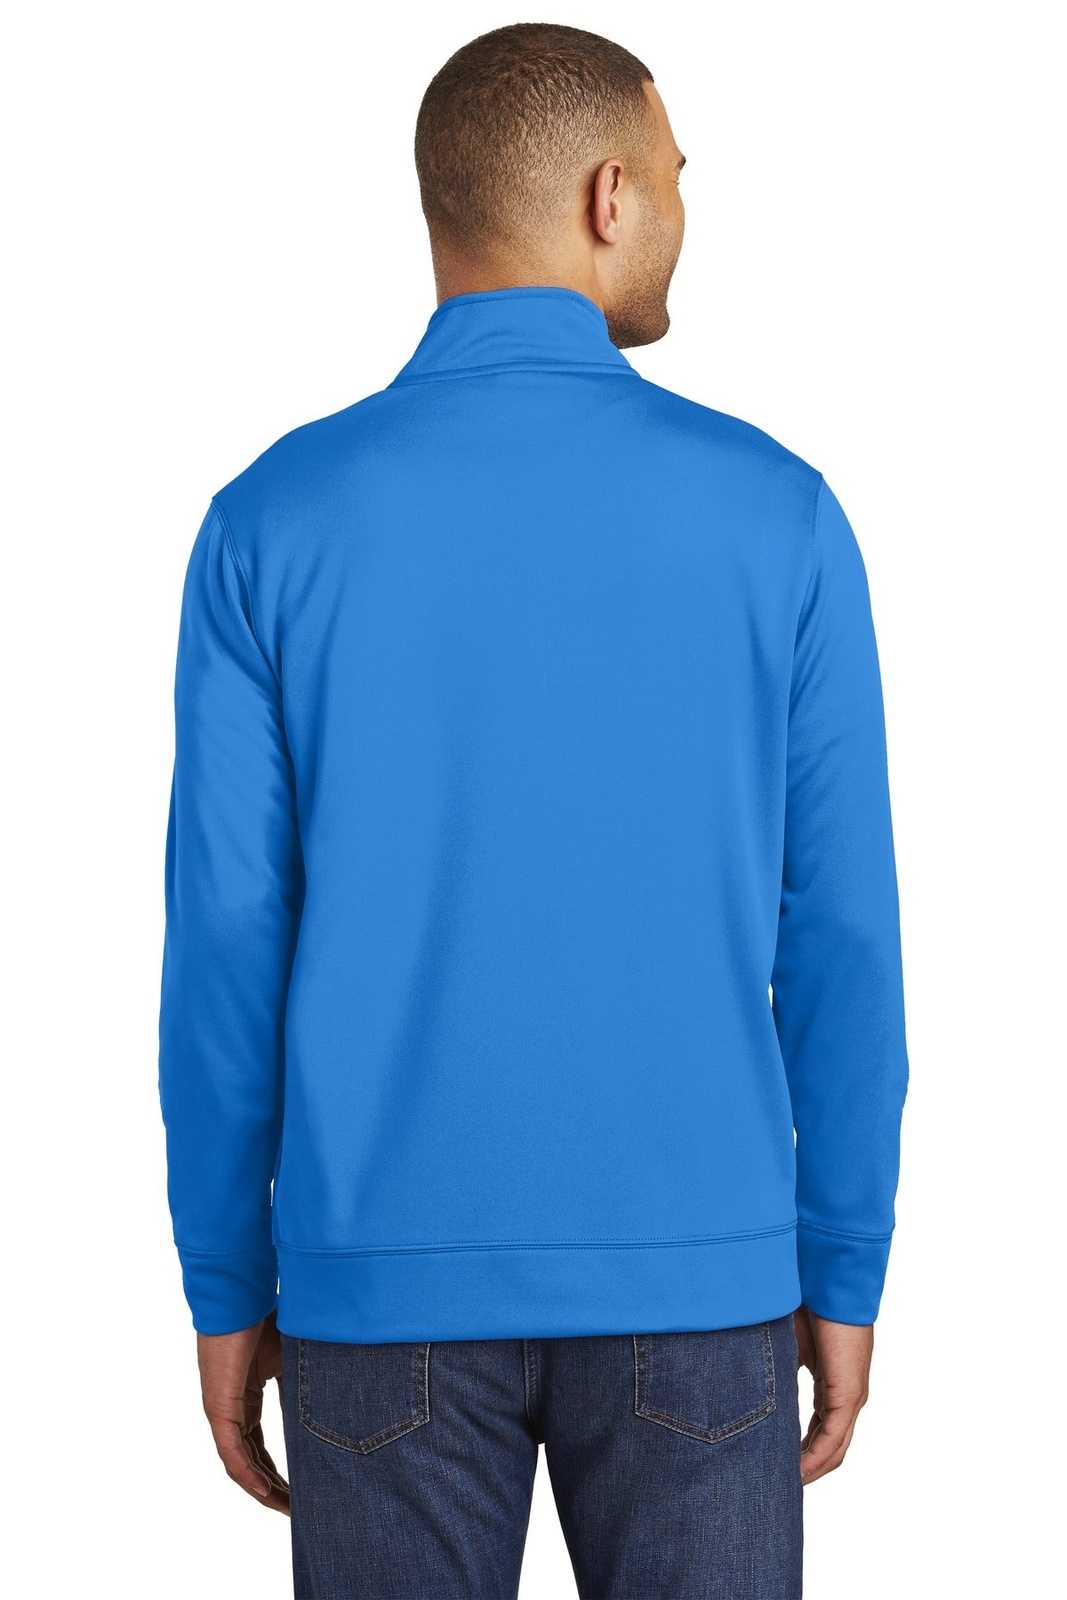 Port & Company PC590Q Fleece 1/4-Zip Pullover Sweatshirt - Royal - HIT a Double - 1